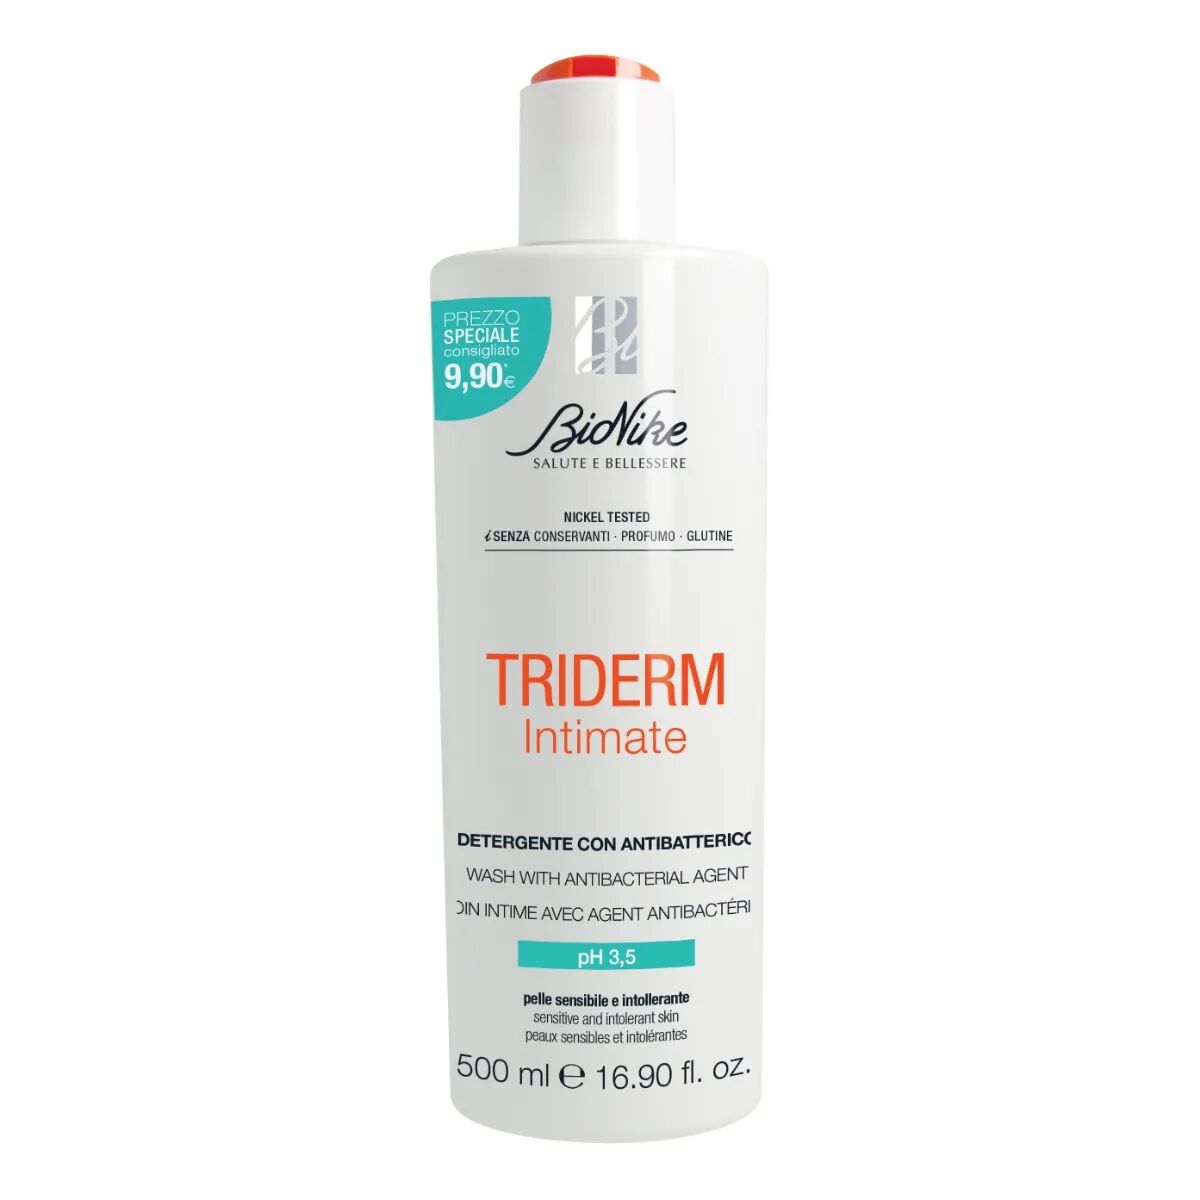 Bionike Triderm Intimate Detergente Antibatterico pH 3,5 PROMO 500 ml